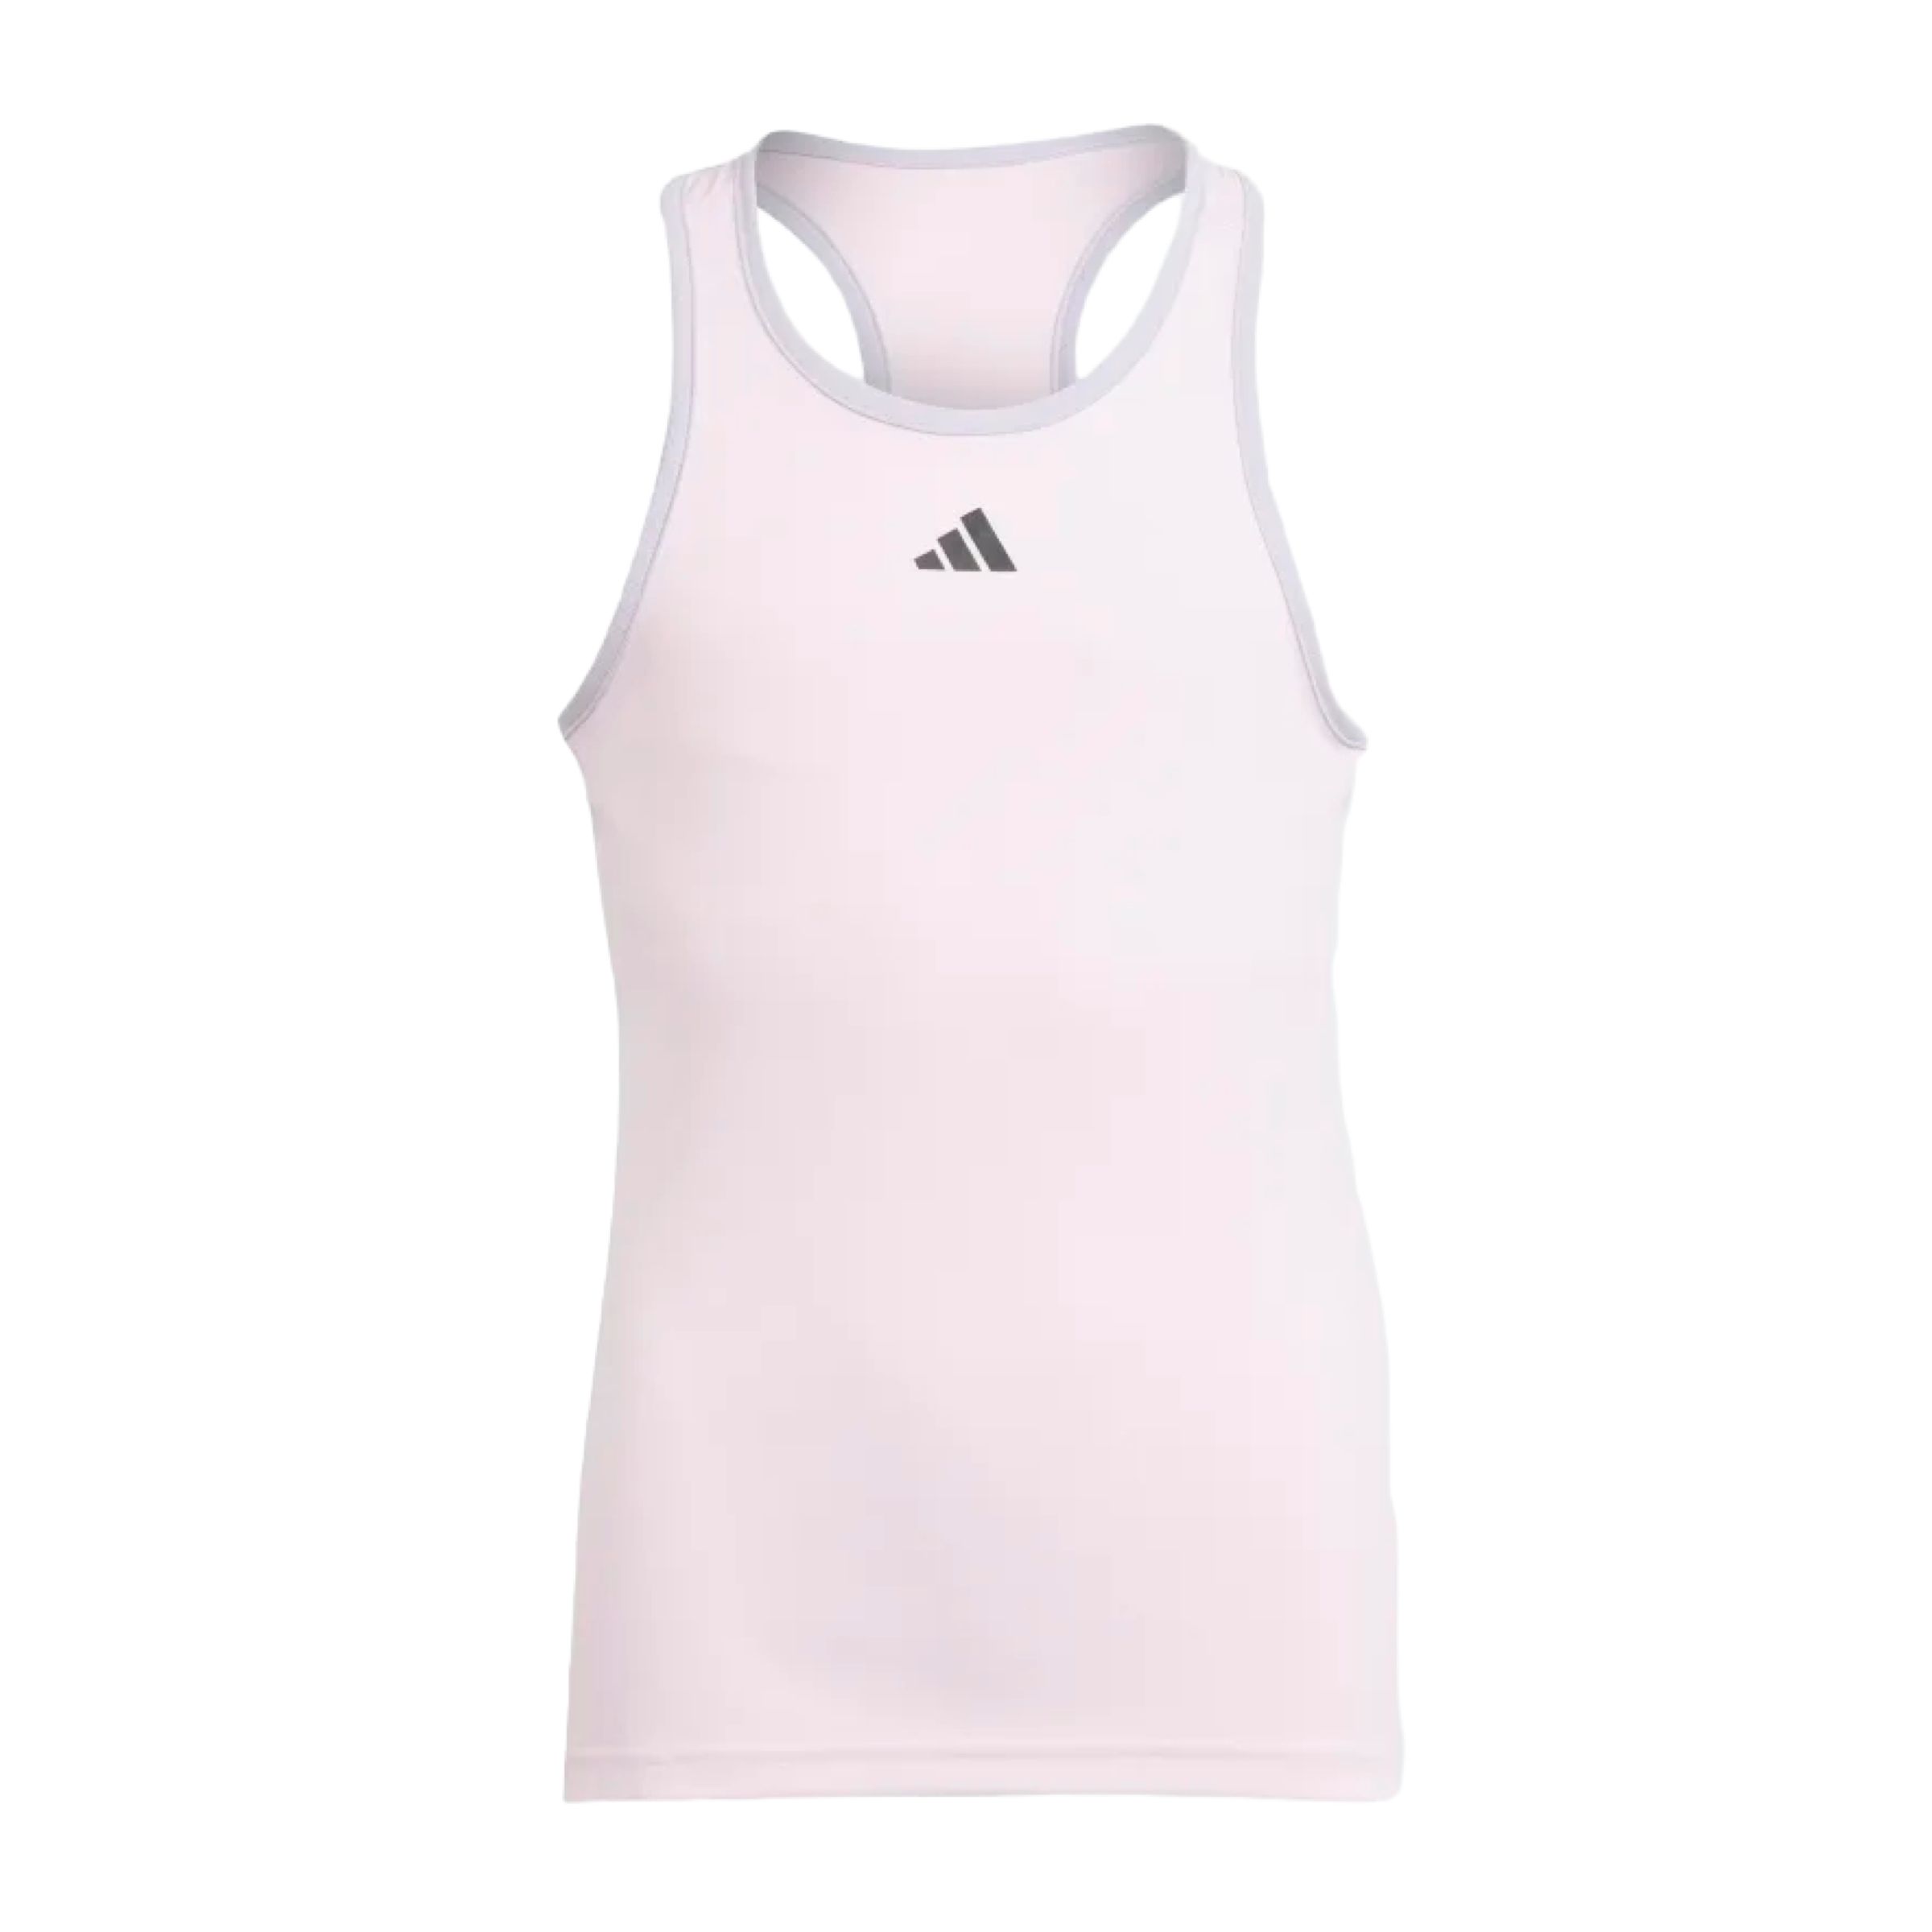 Adidas Canotta Club Bambina Clear Pink